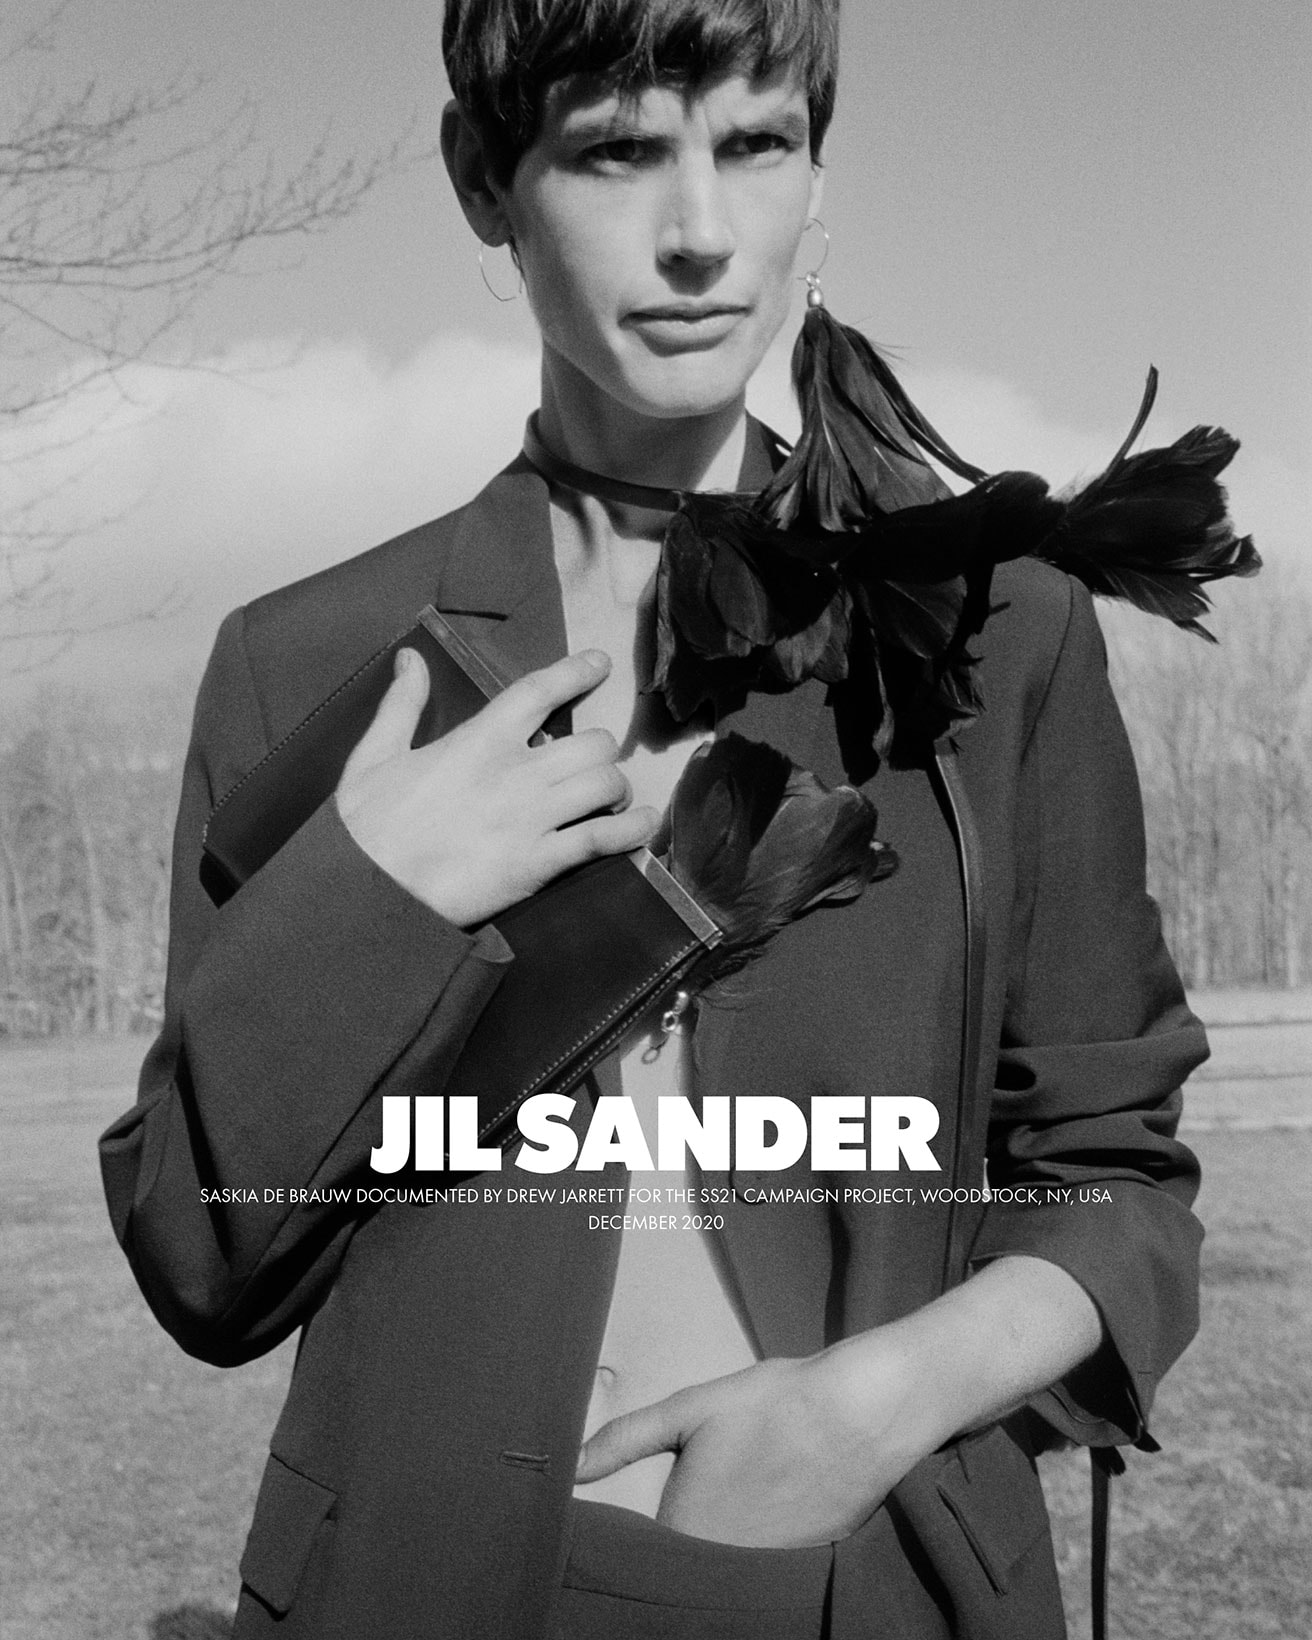 jil sander spring summer campaign photography project luke lucie meier book launch info